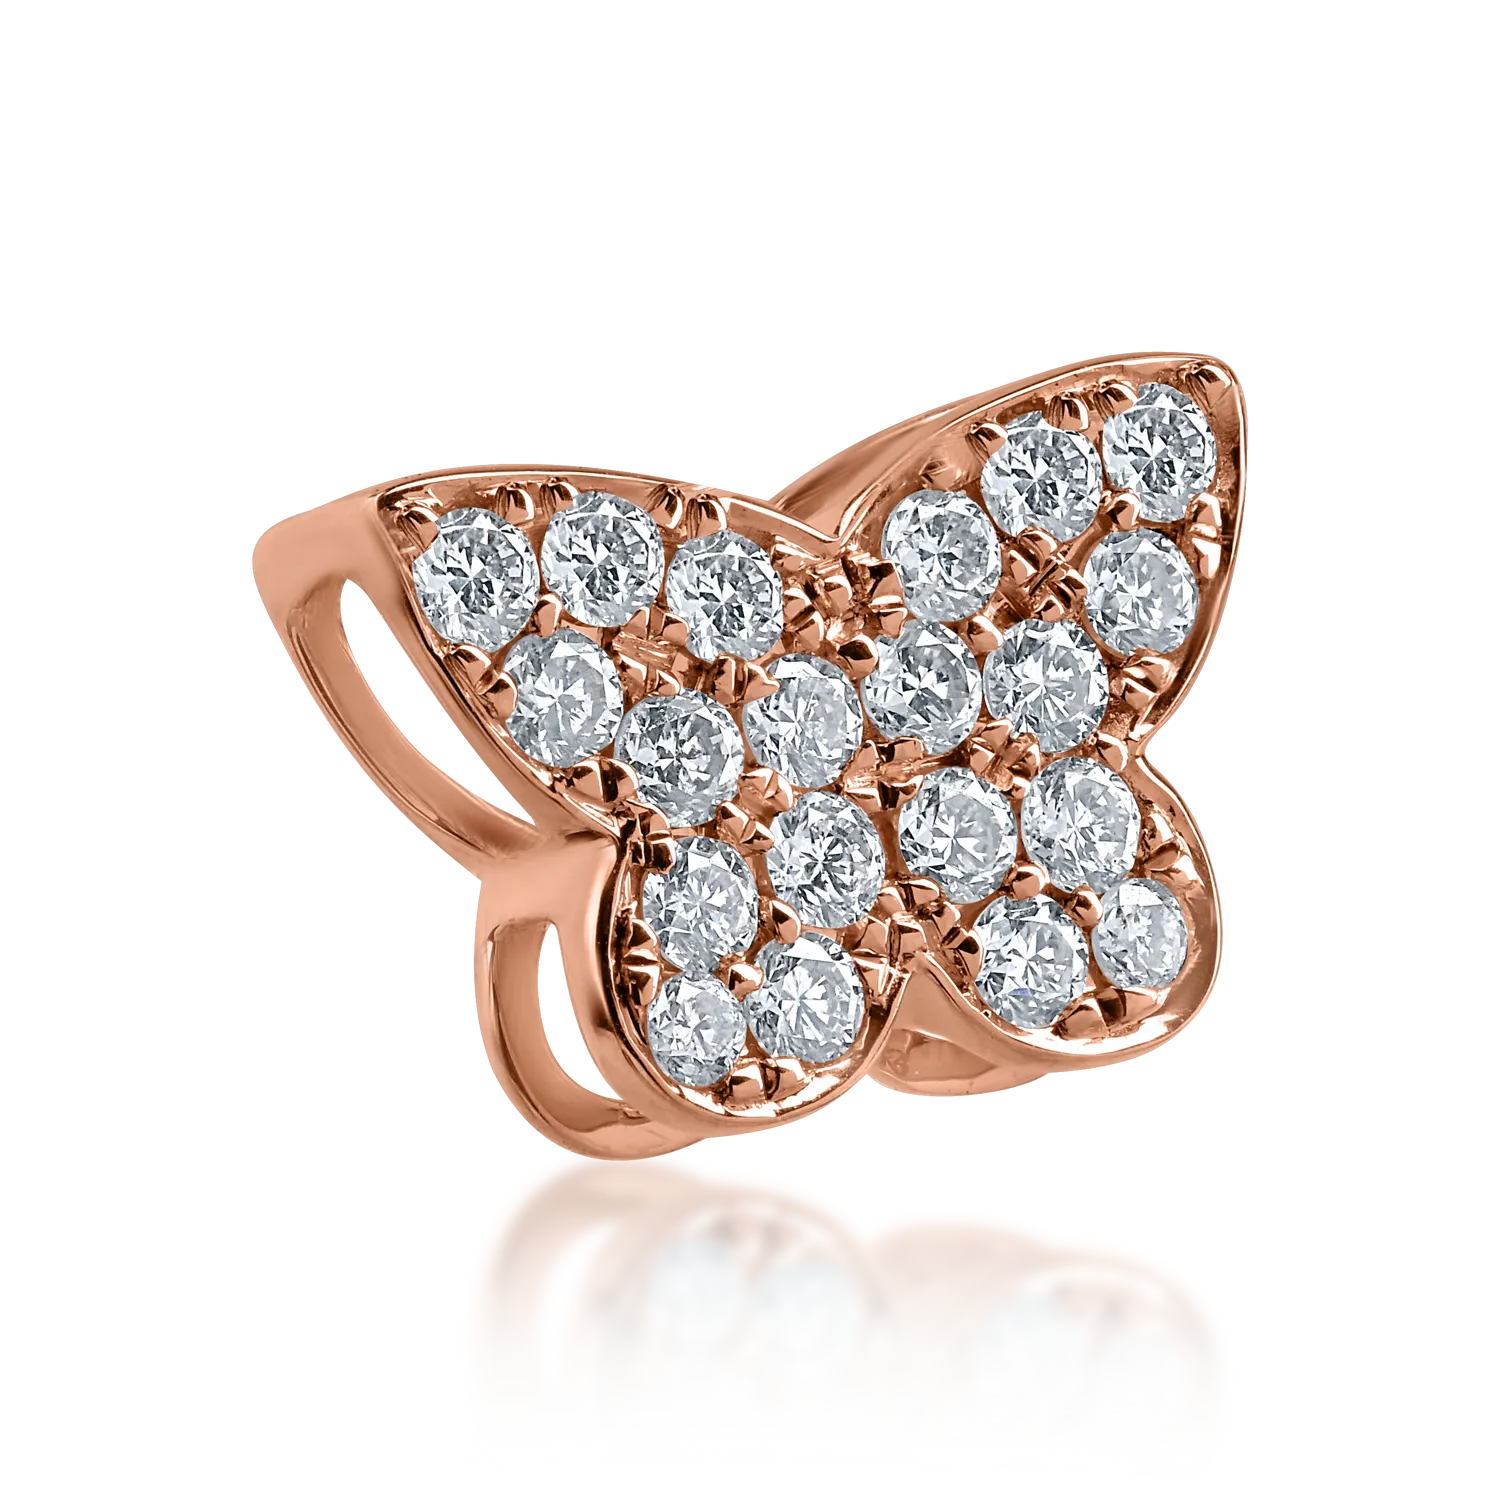 Pandantiv fluture din aur roz cu diamante de 0.21ct